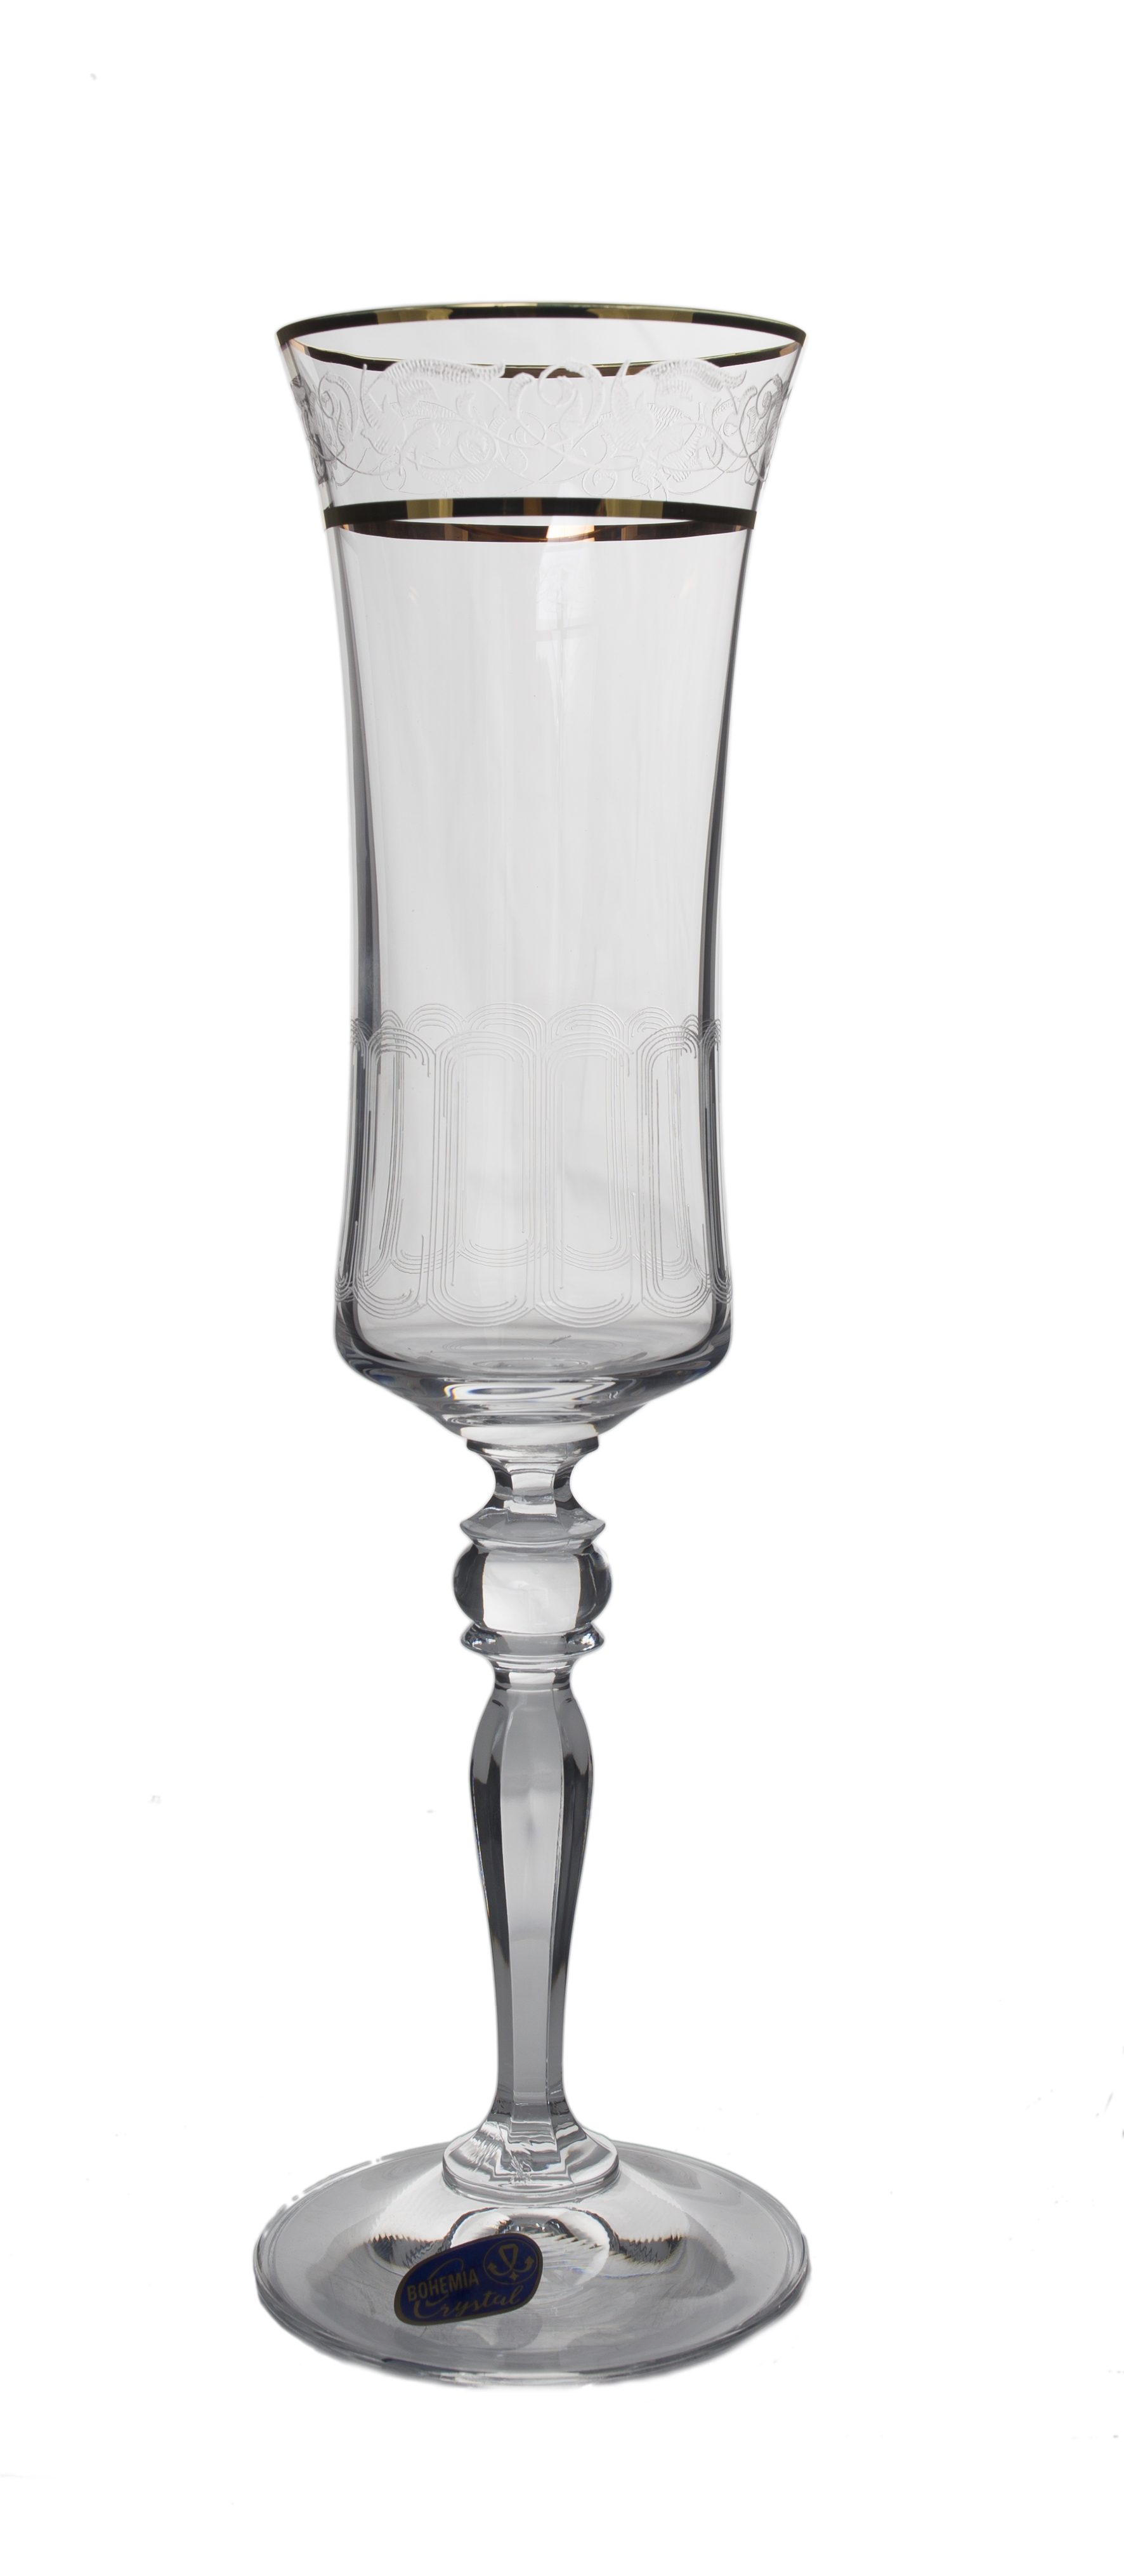 GRACE decor aur - Set 6 pahare sticla cristalina sampanie 190 ml